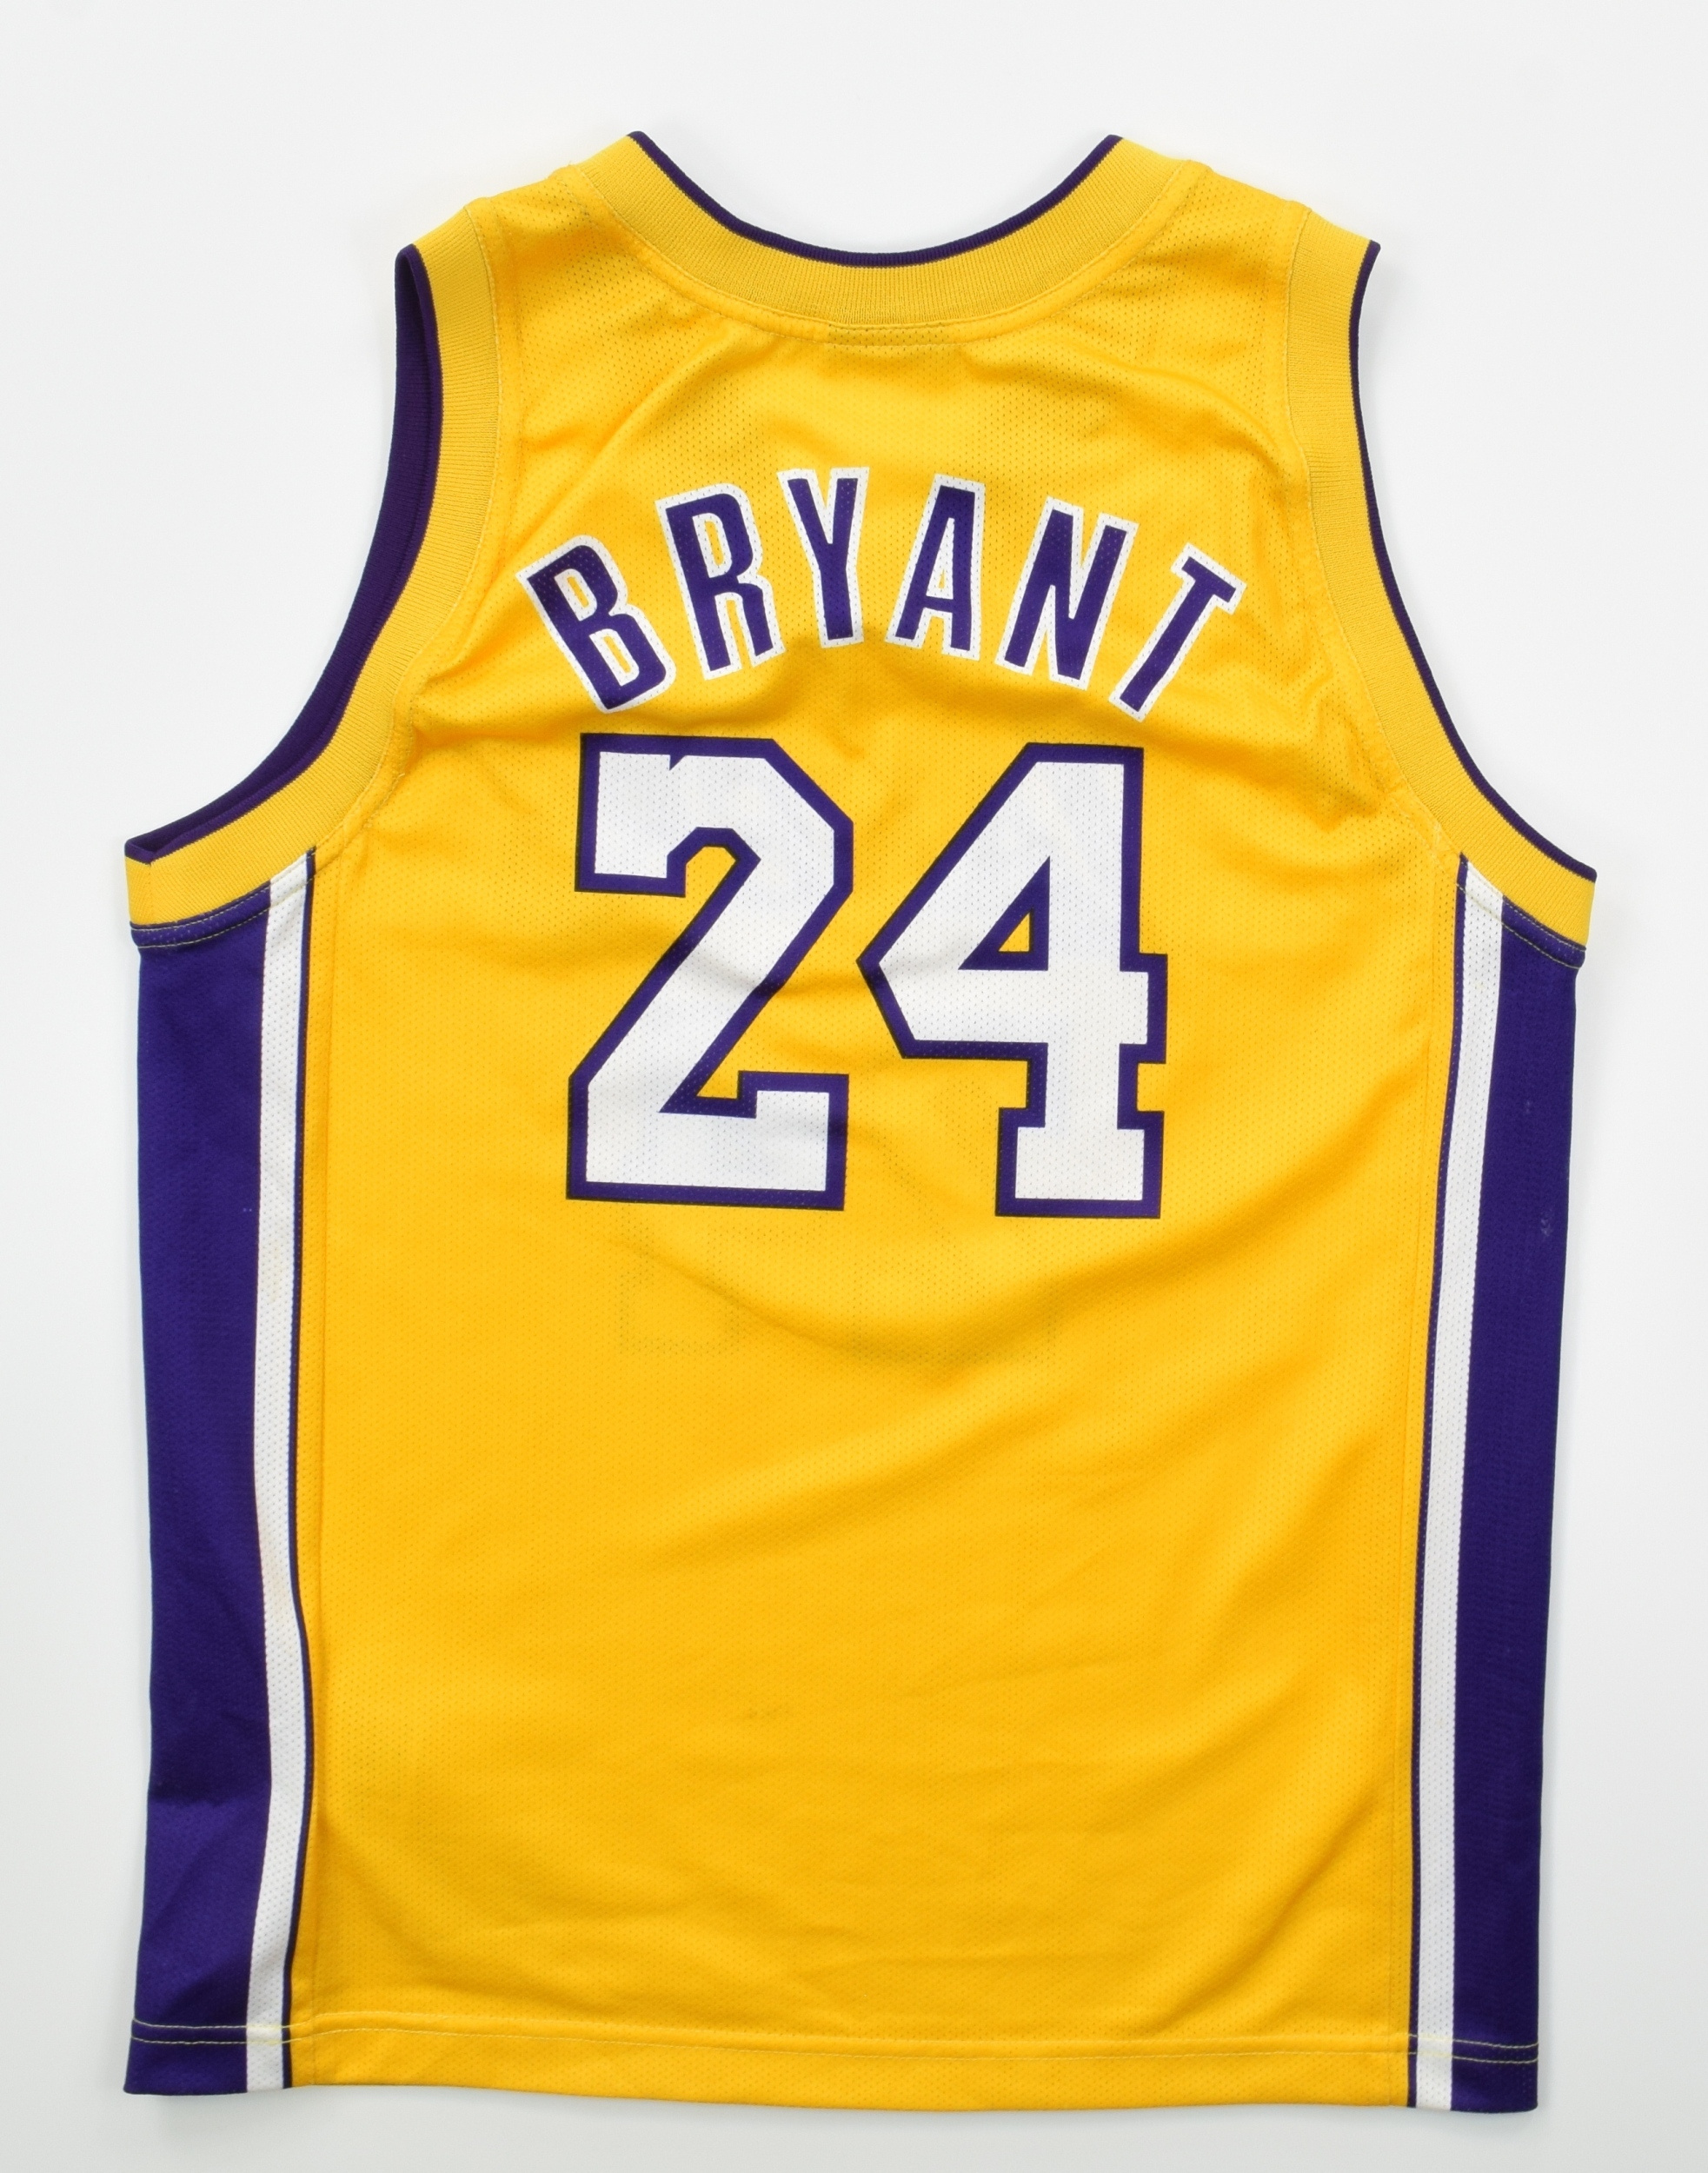 Boys Los Angeles Lakers NBA Jerseys for sale